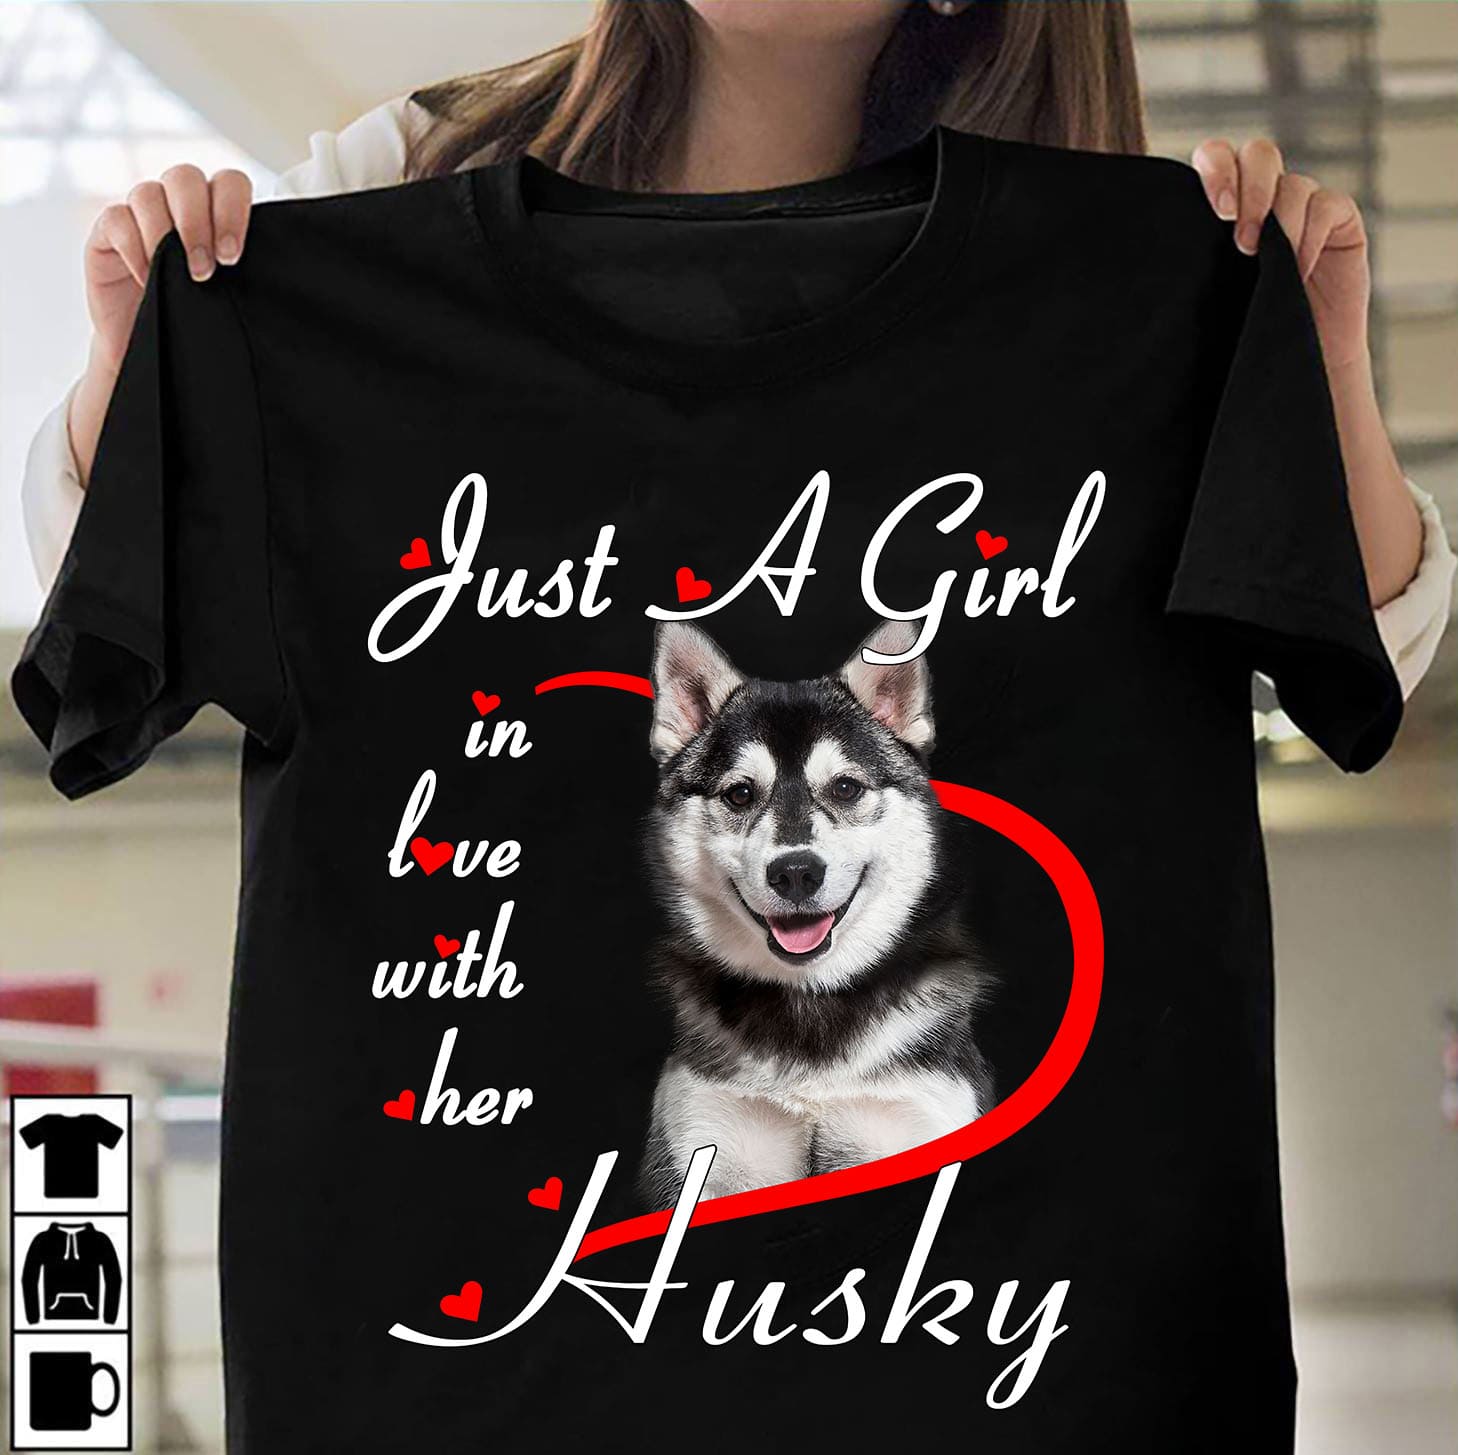 Just a girl in love with her Husky - Girl loves Husky dogs, Husky dog T-shirt